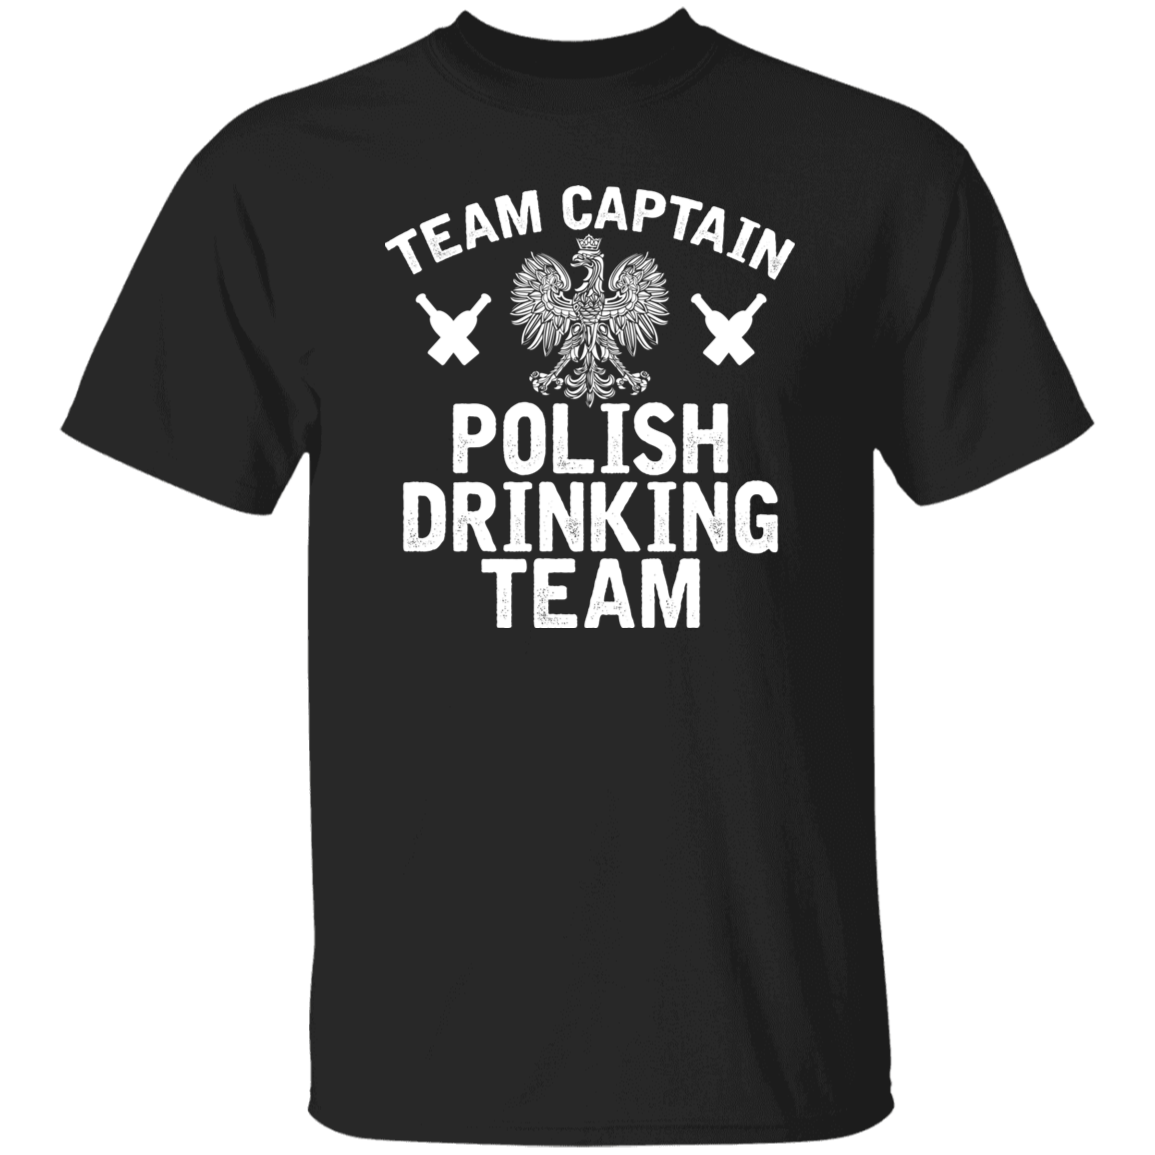 Team Captain Polish Drinking Team Apparel CustomCat G500 5.3 oz. T-Shirt Black S